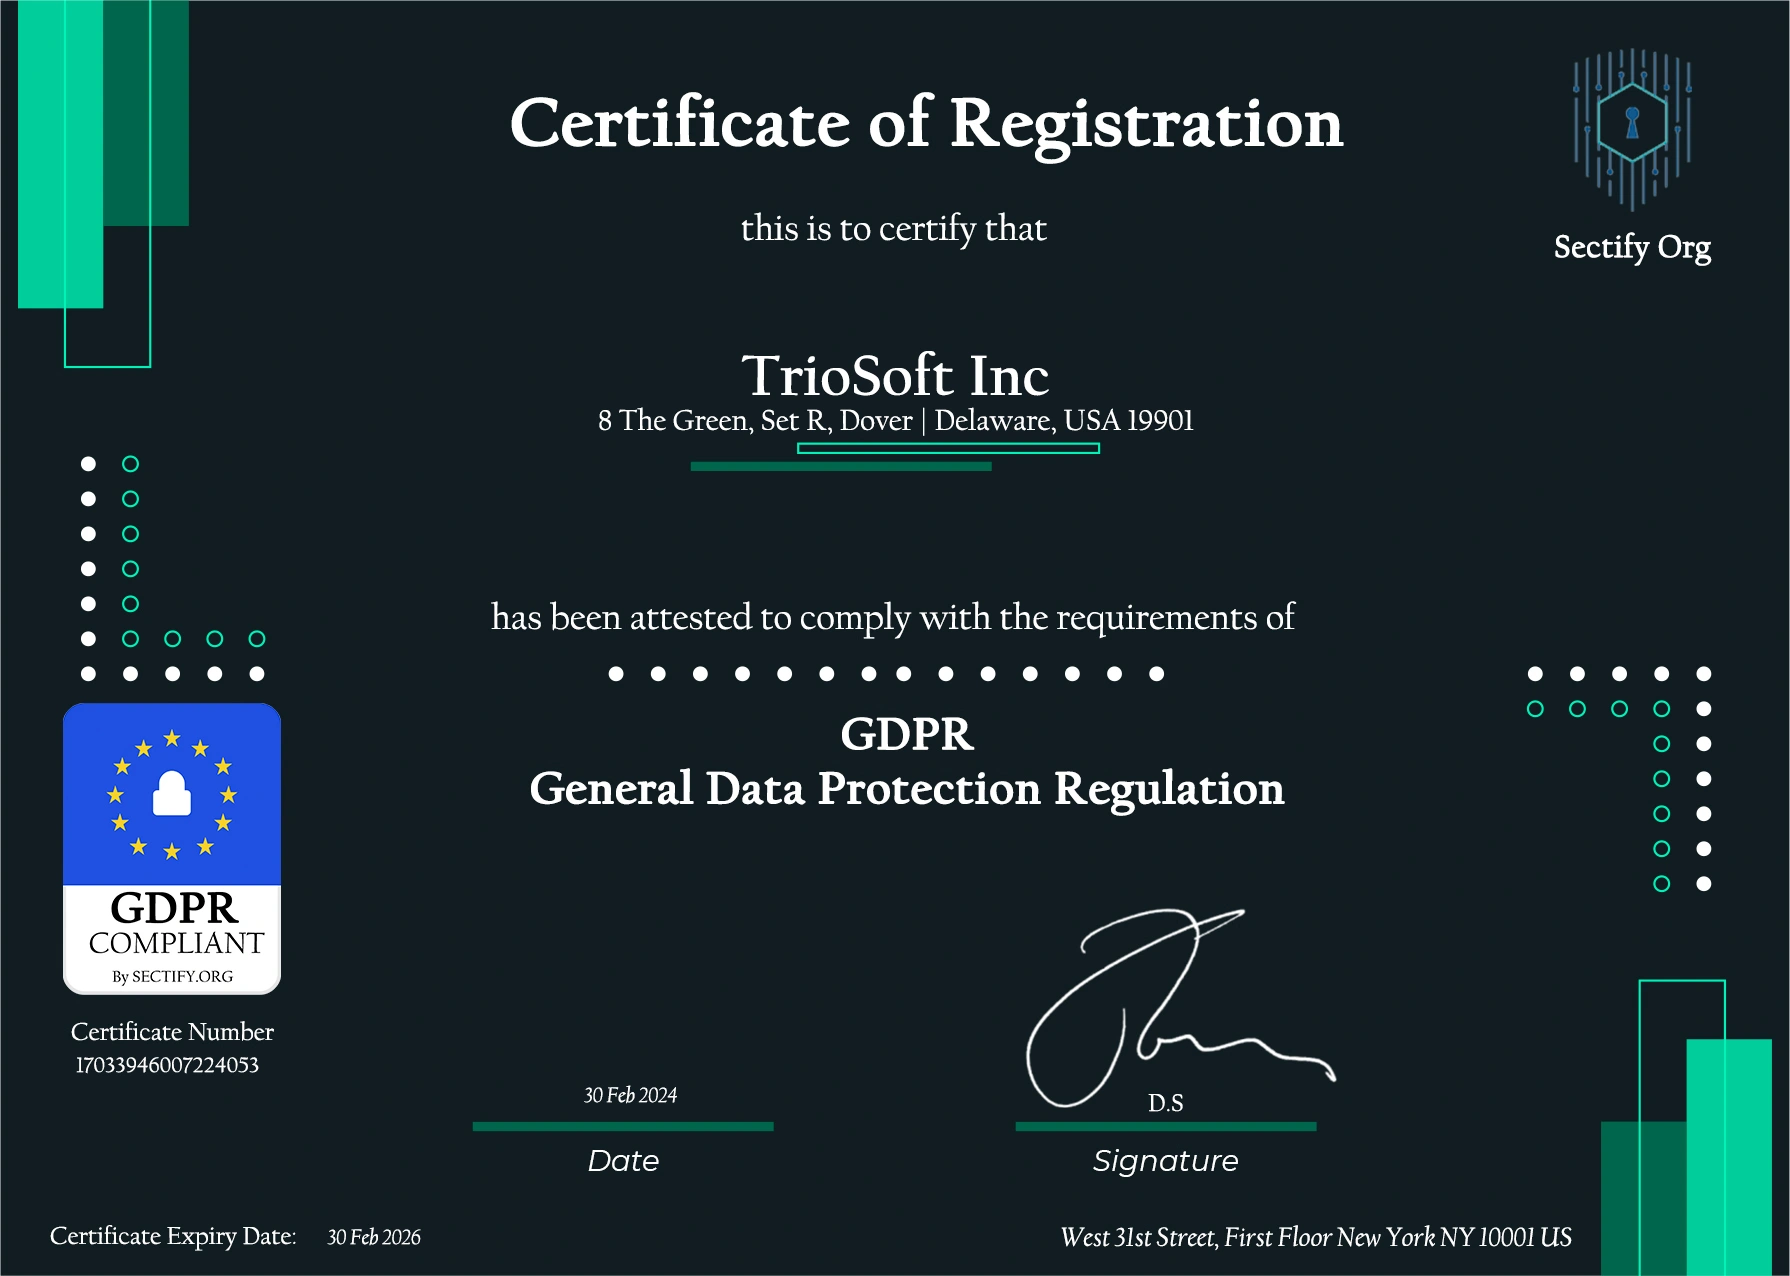 Trio's GDPR certification